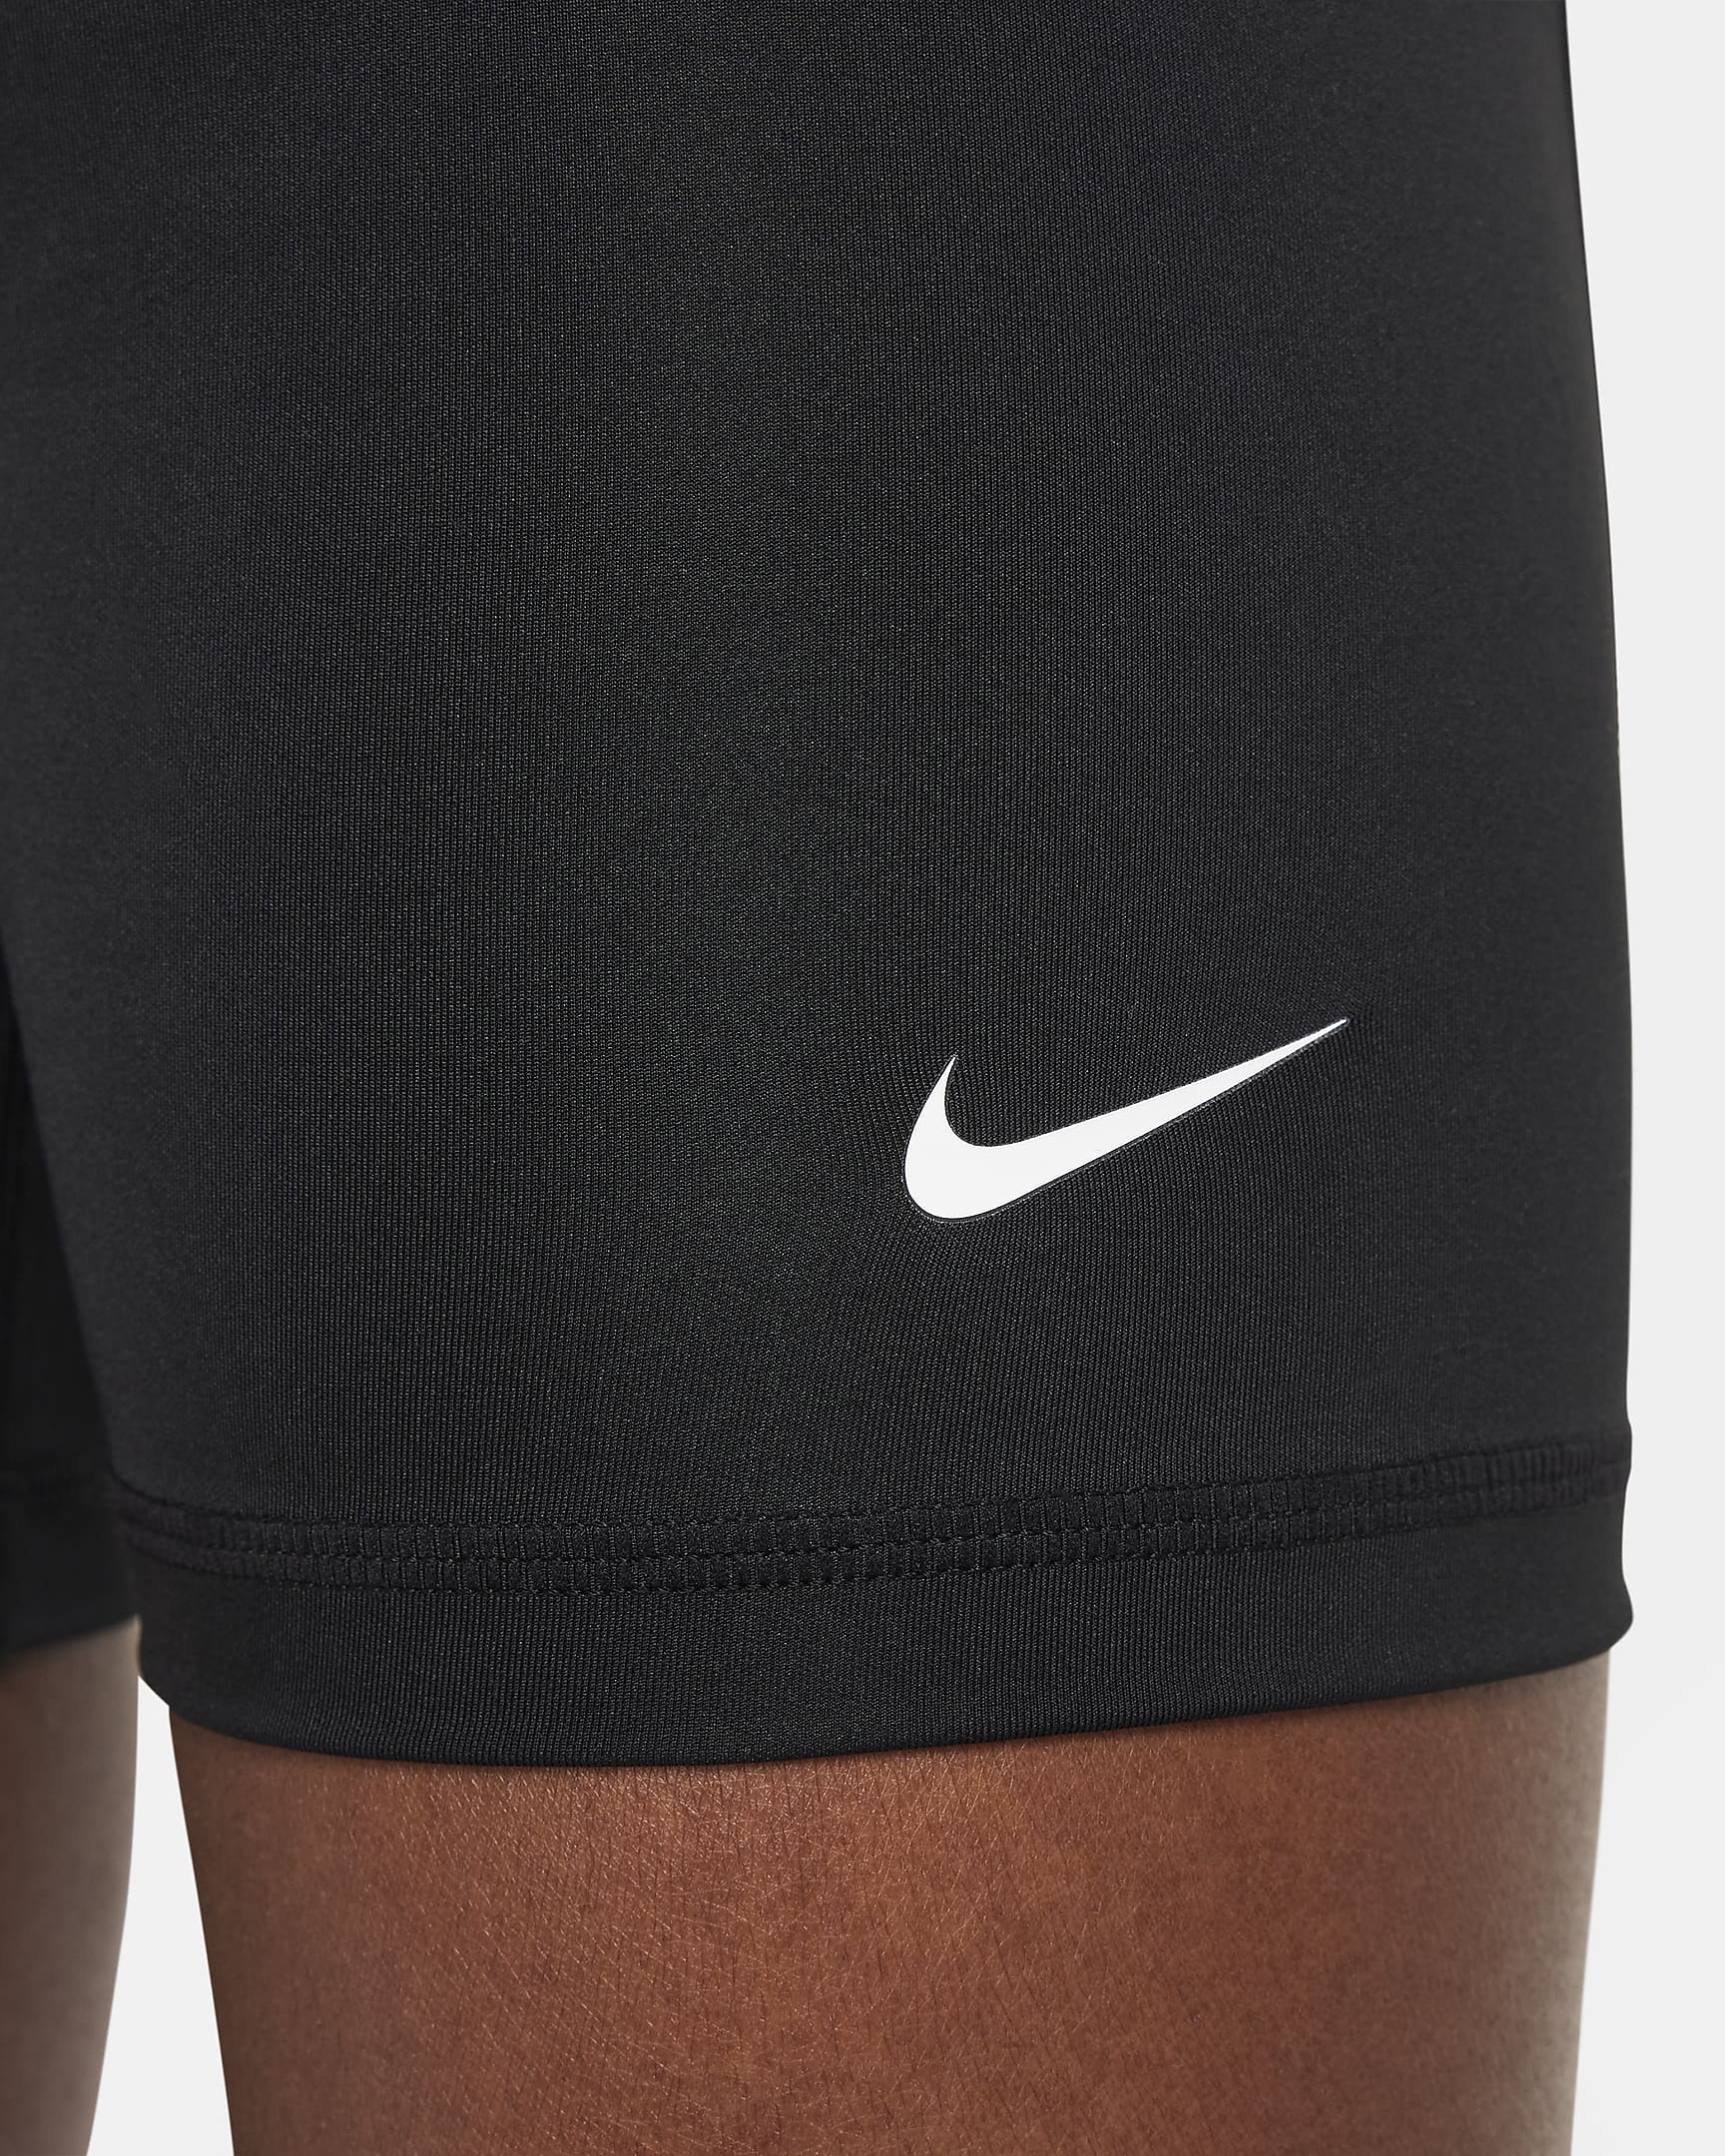 Shorts Nike Pro - Ragazza - Nero/Bianco